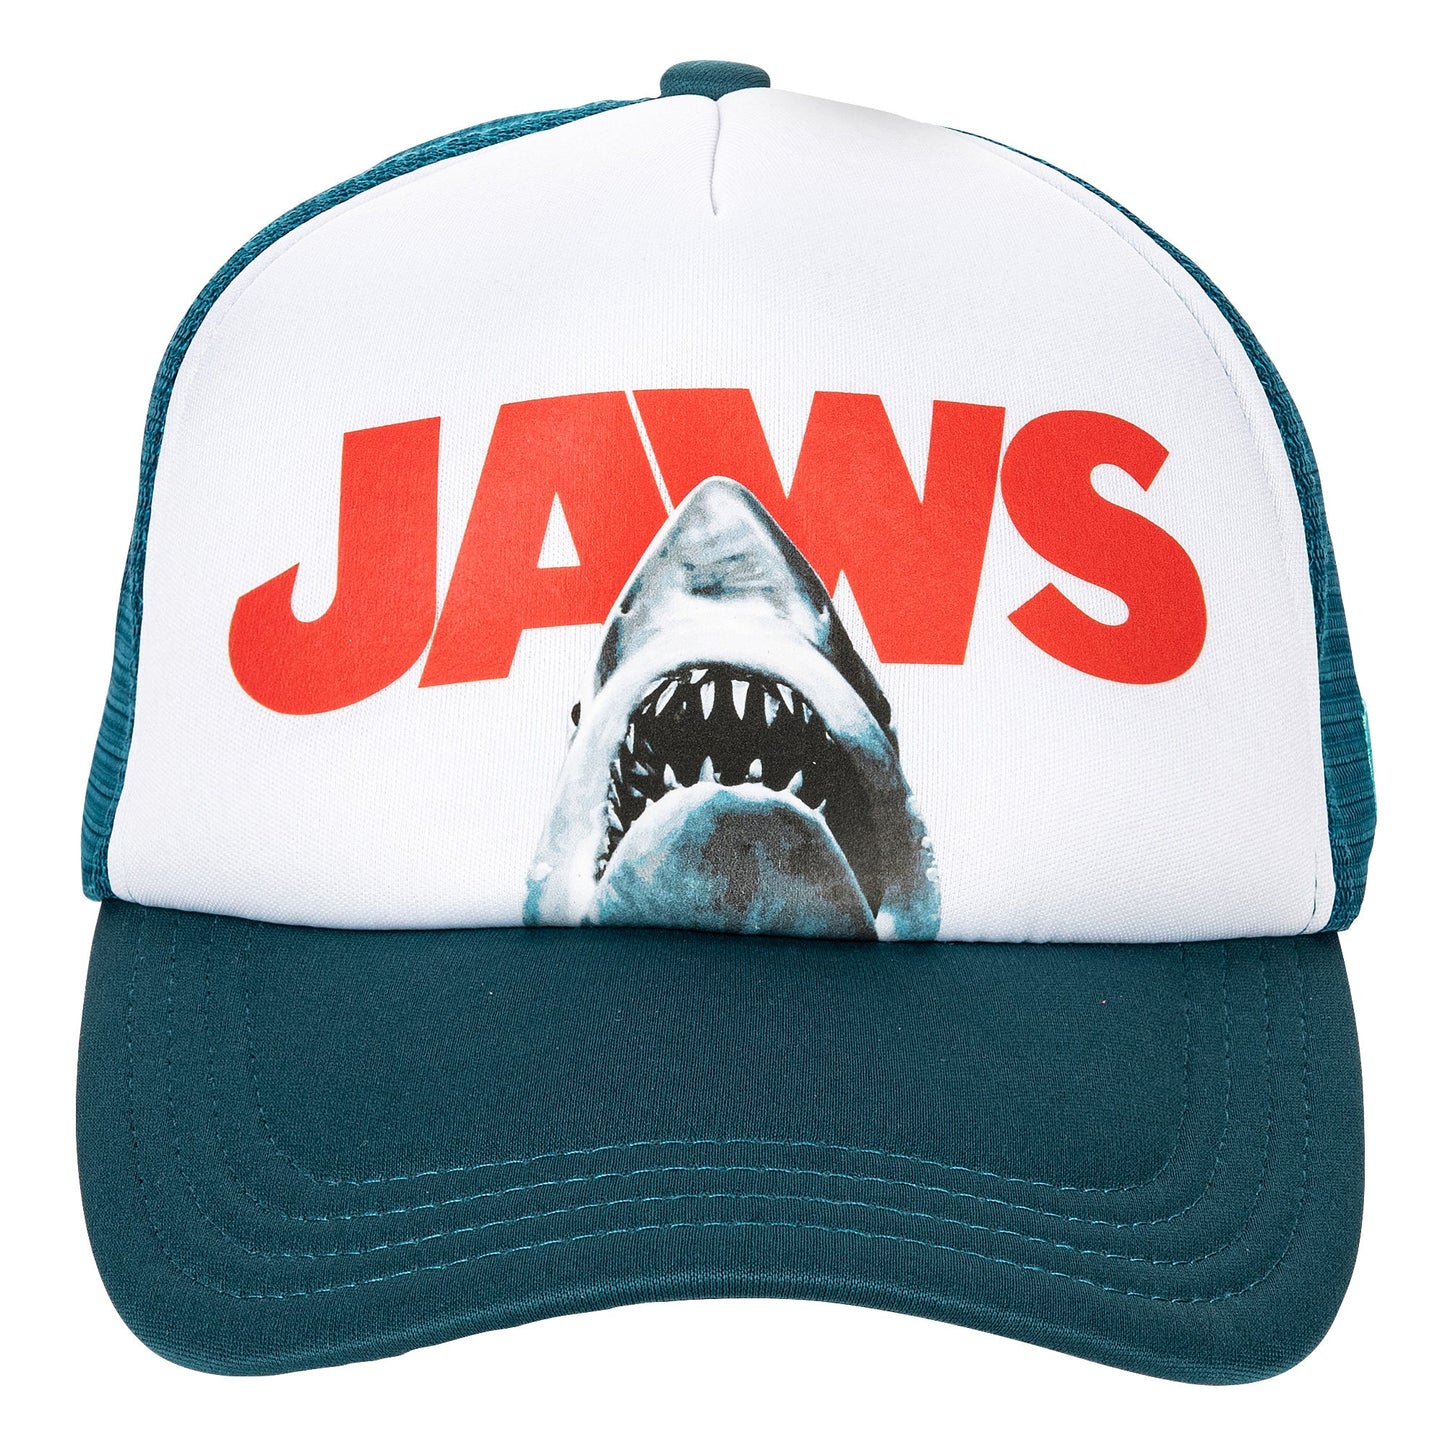 Jaws - Trucker Hat